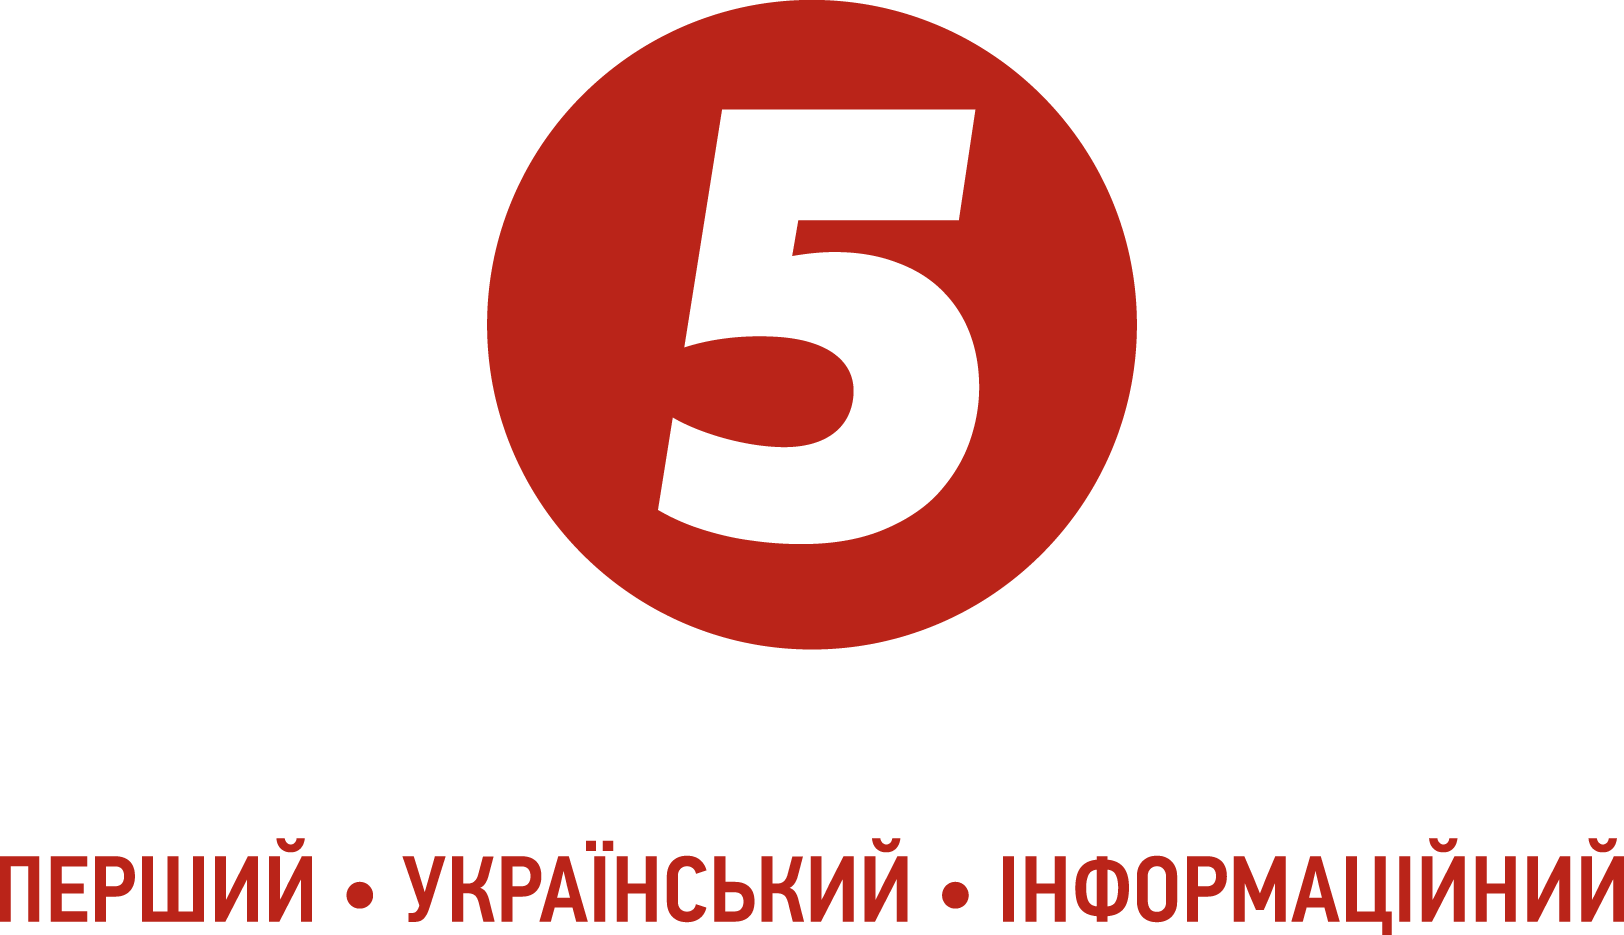 5tv logo